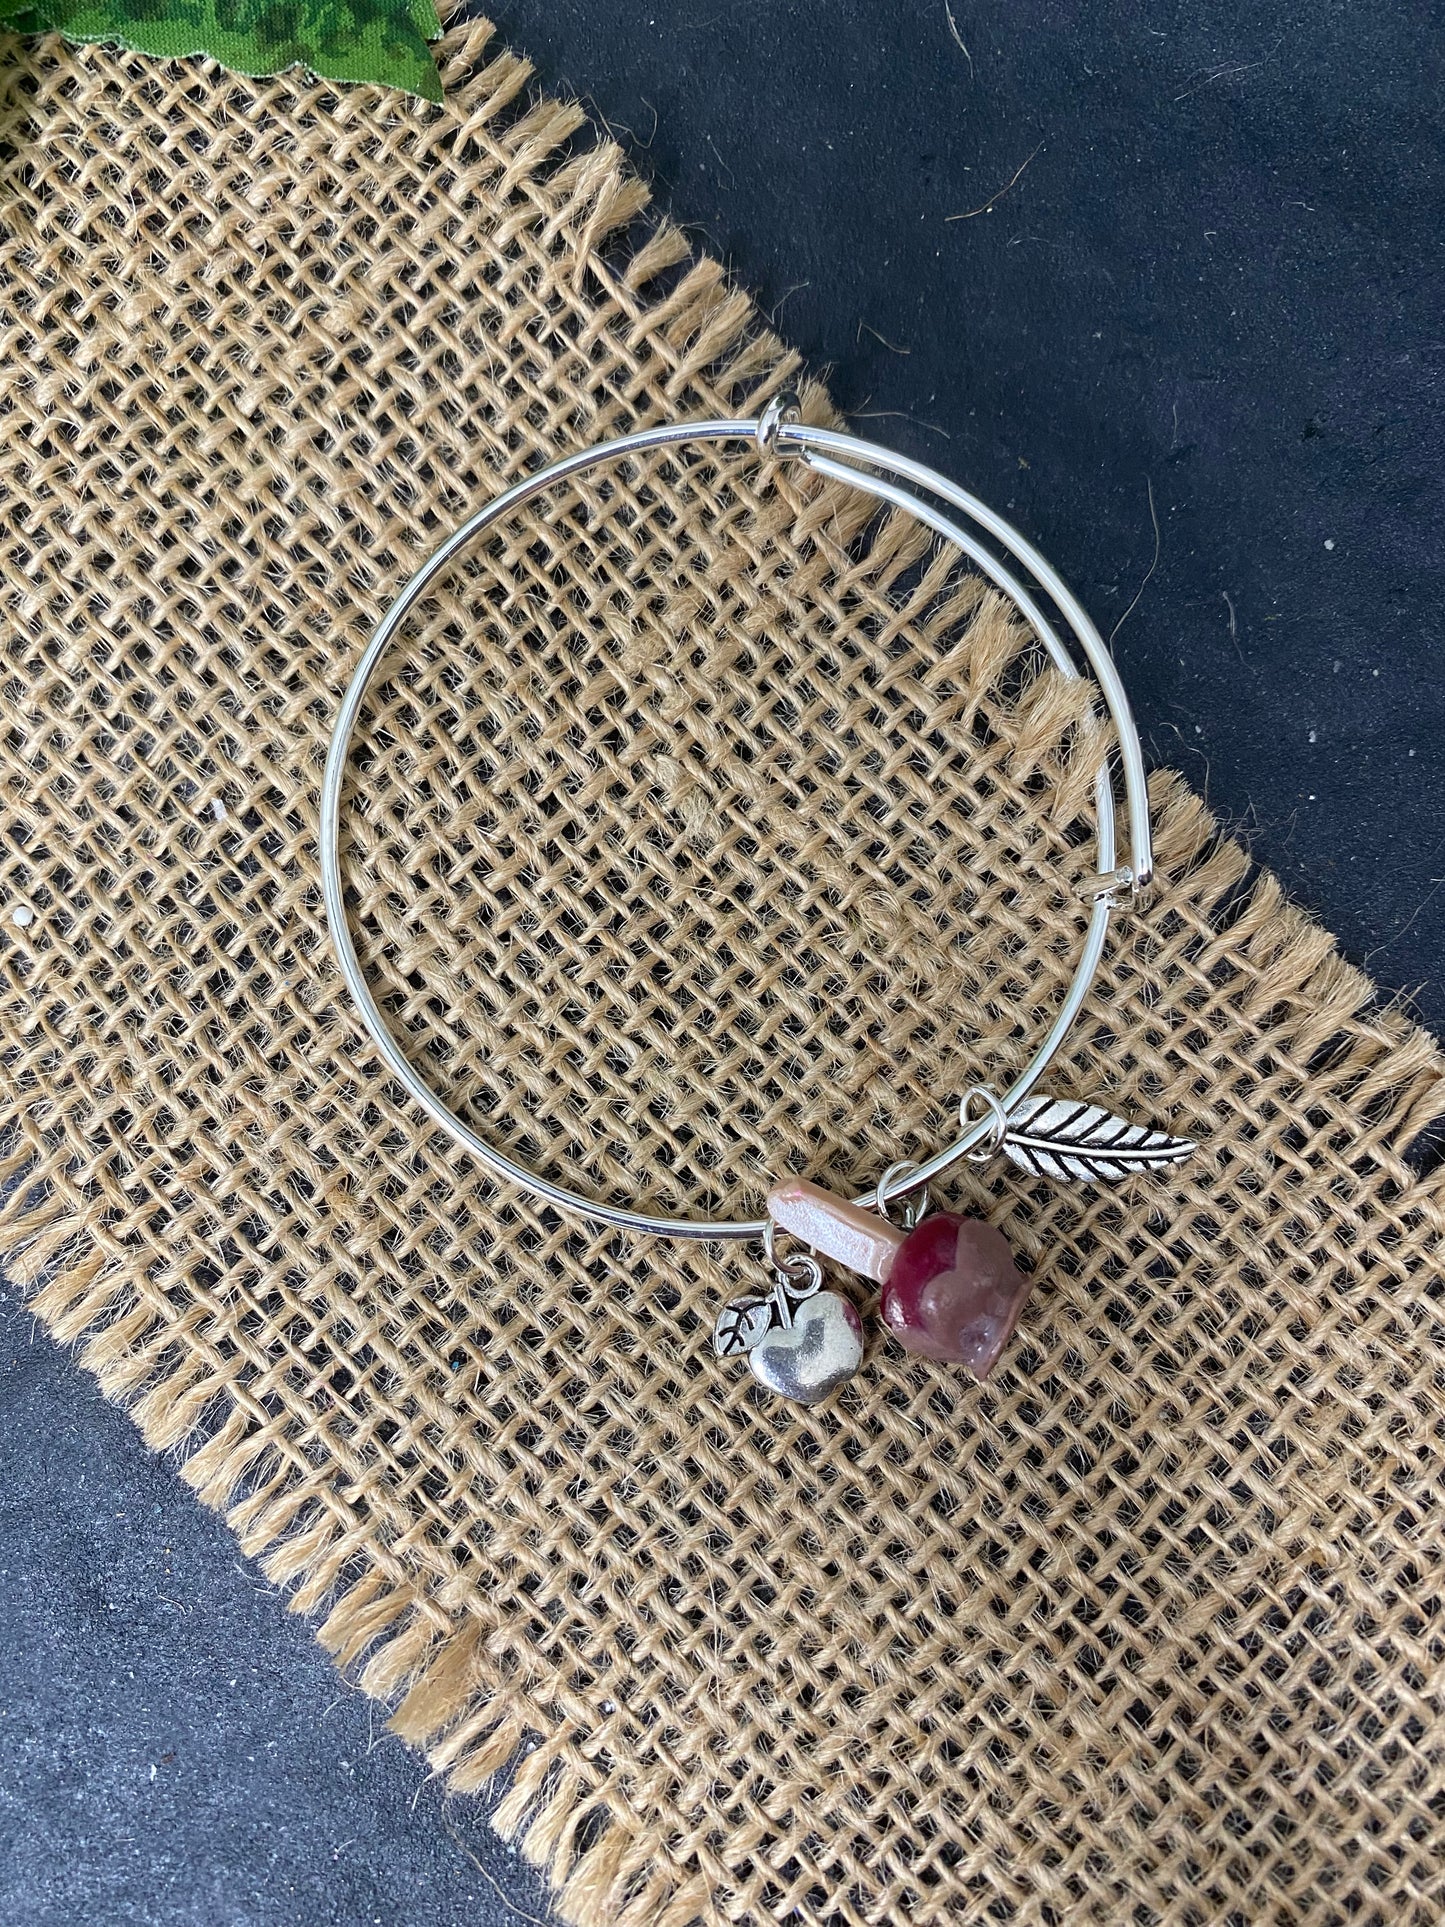 Candy Apple Charm Bracelet